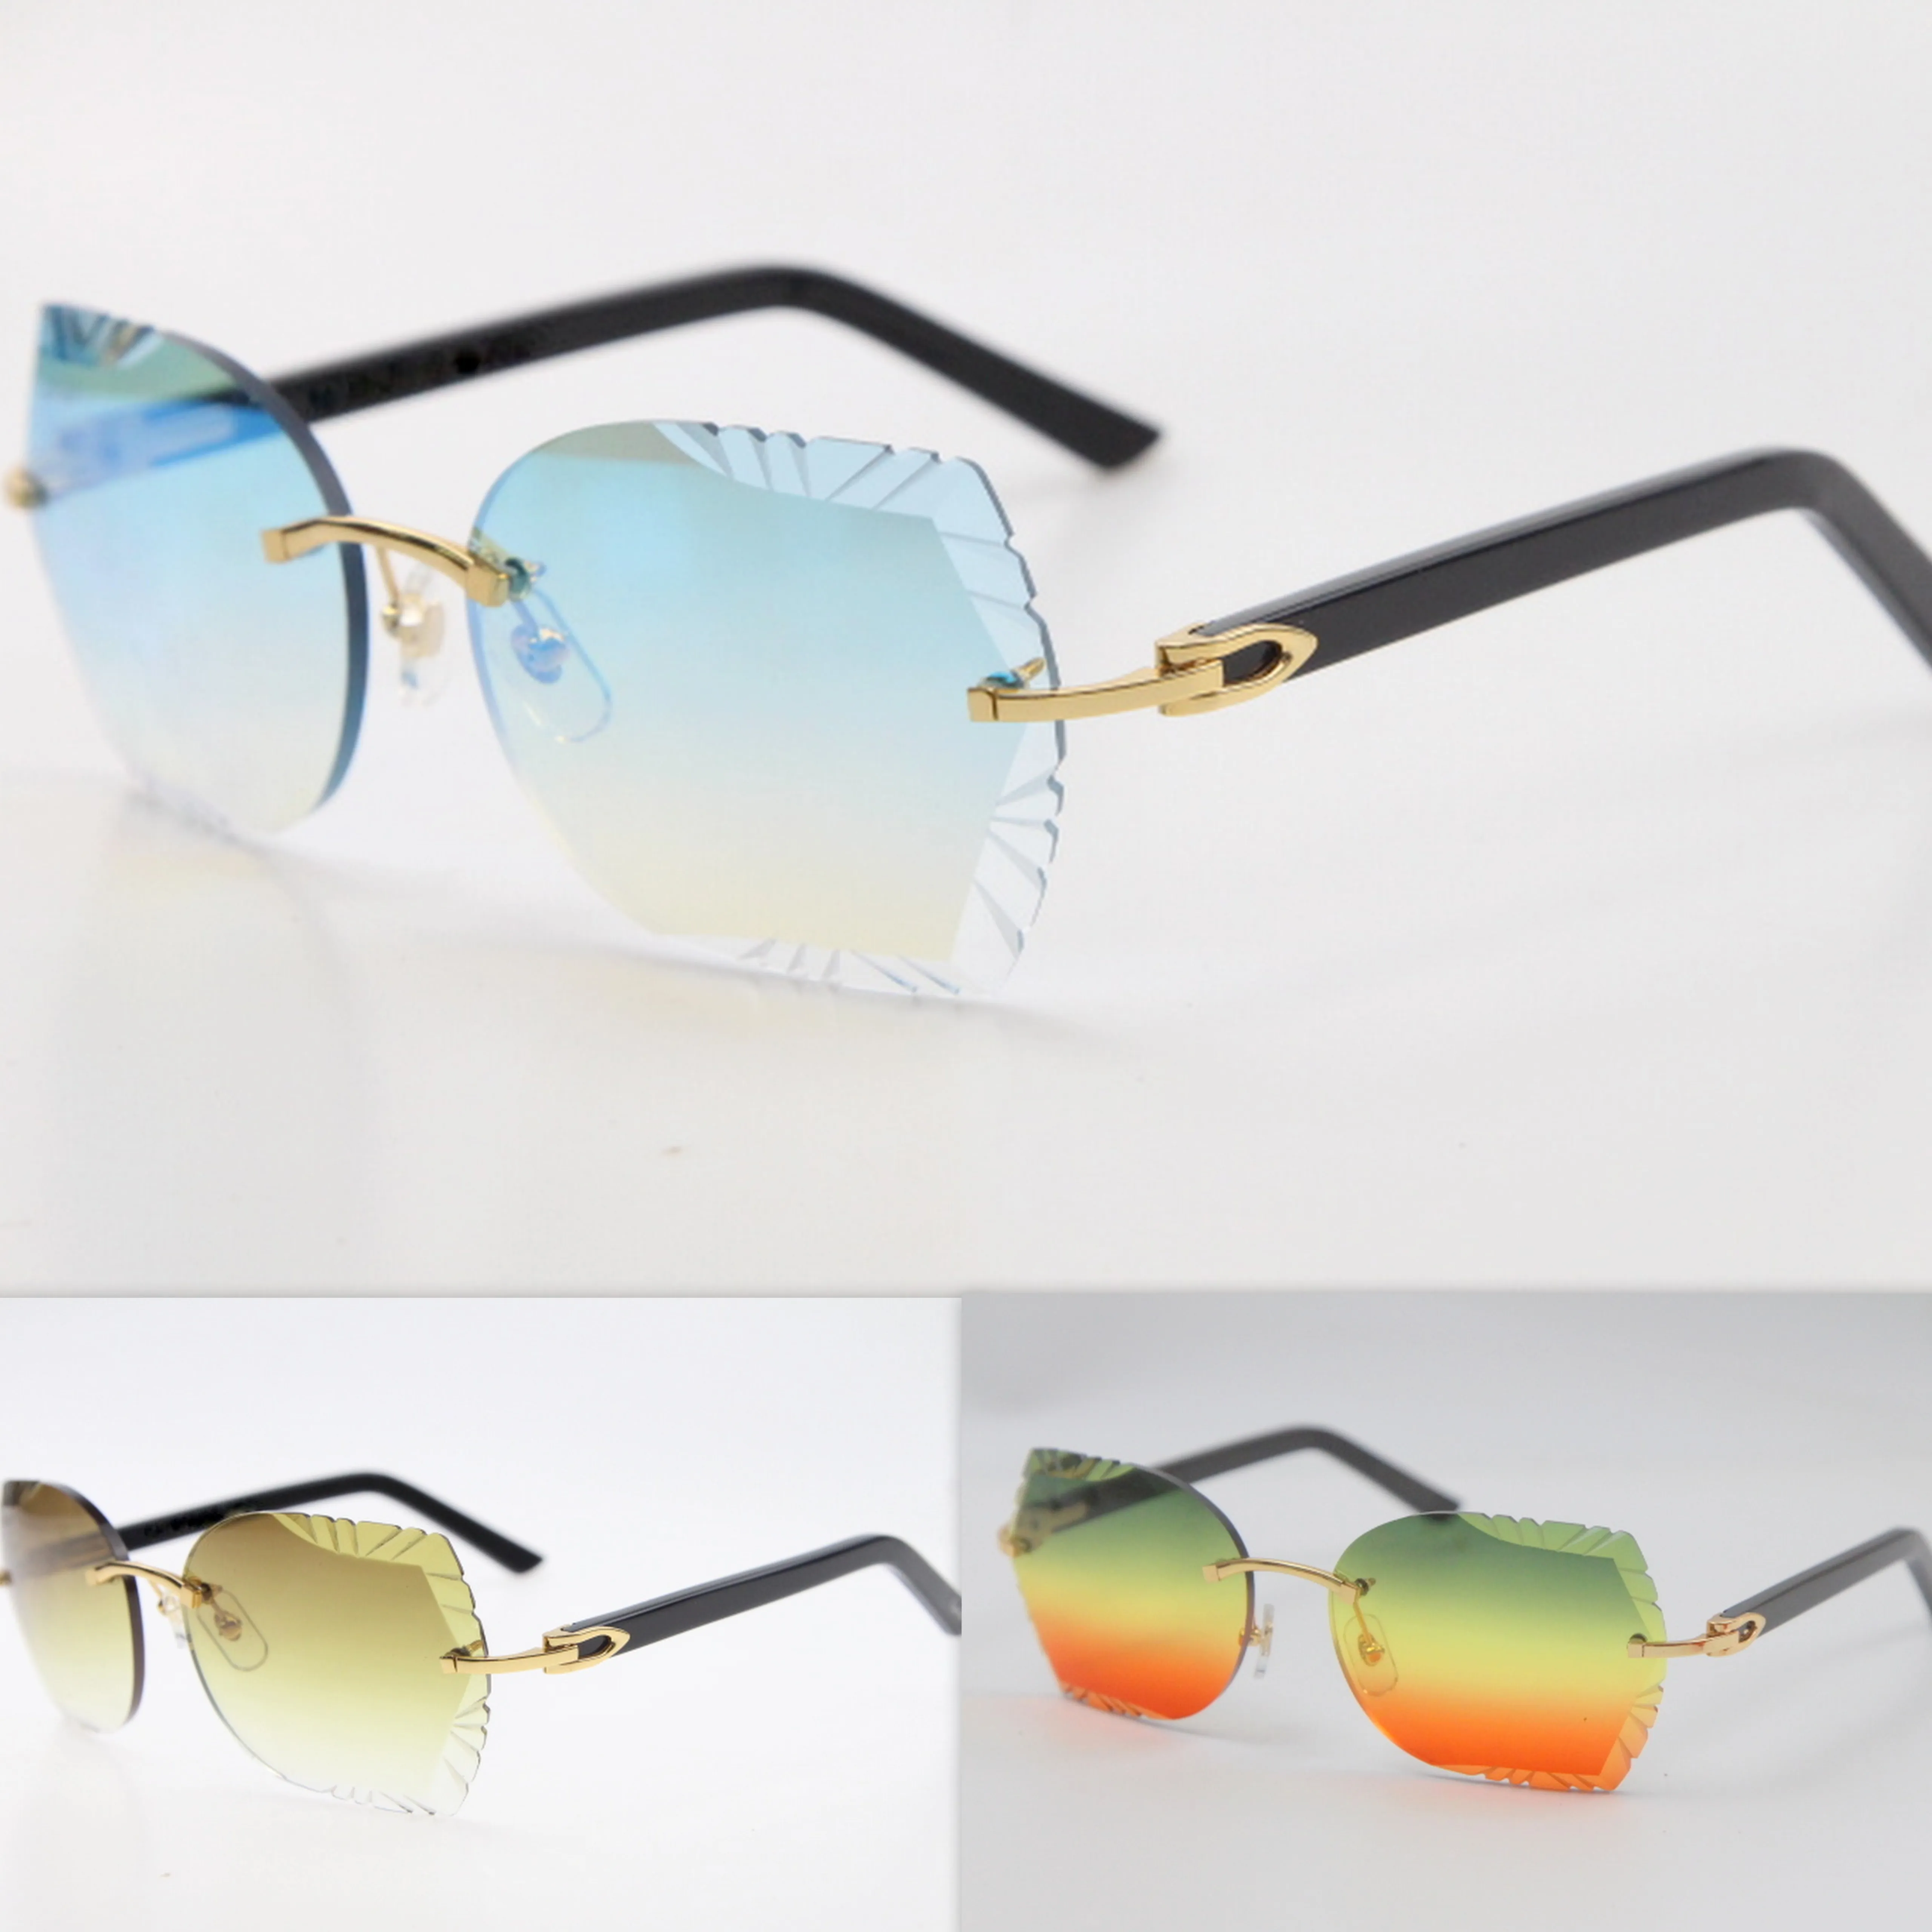 3 0 Thick Carved Lens Sunglasses Rimless Metal Mix Aztec Black Plank Sun glasses Unisex Optical cat eye 18K Gold Frames UV400 Slim2678